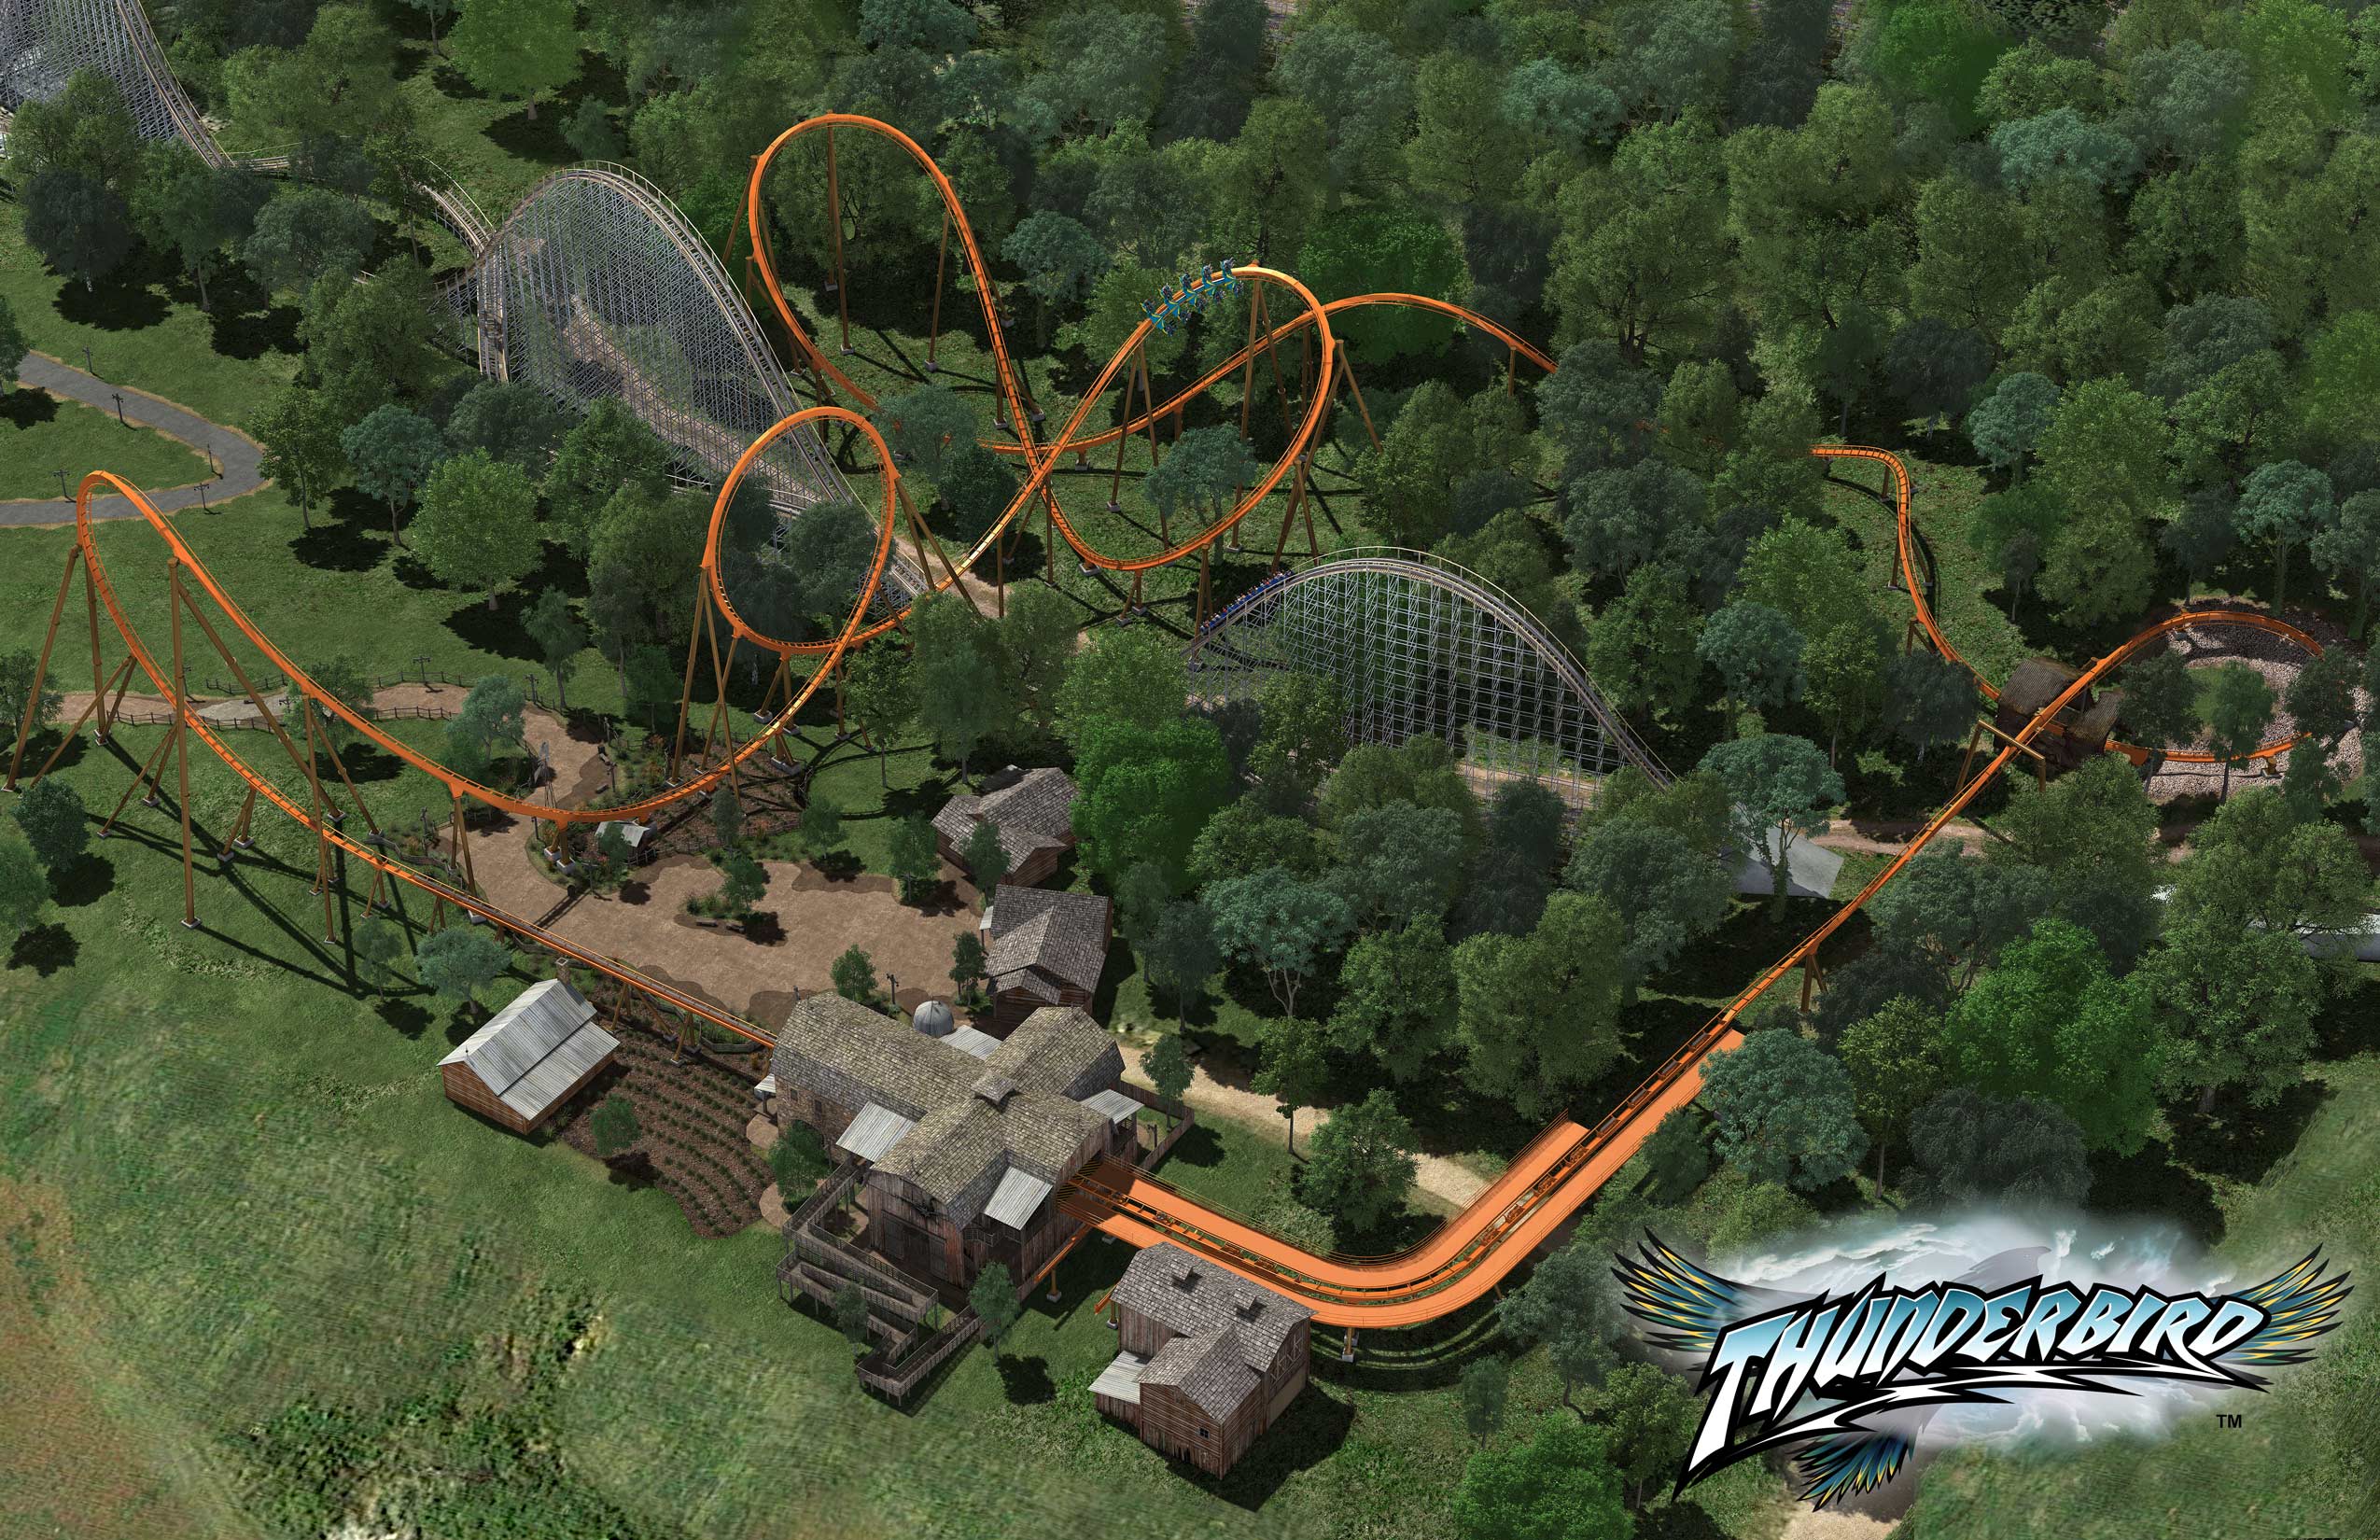 Holiday World Thunderbird Coaster Aerial Wallpaper Click